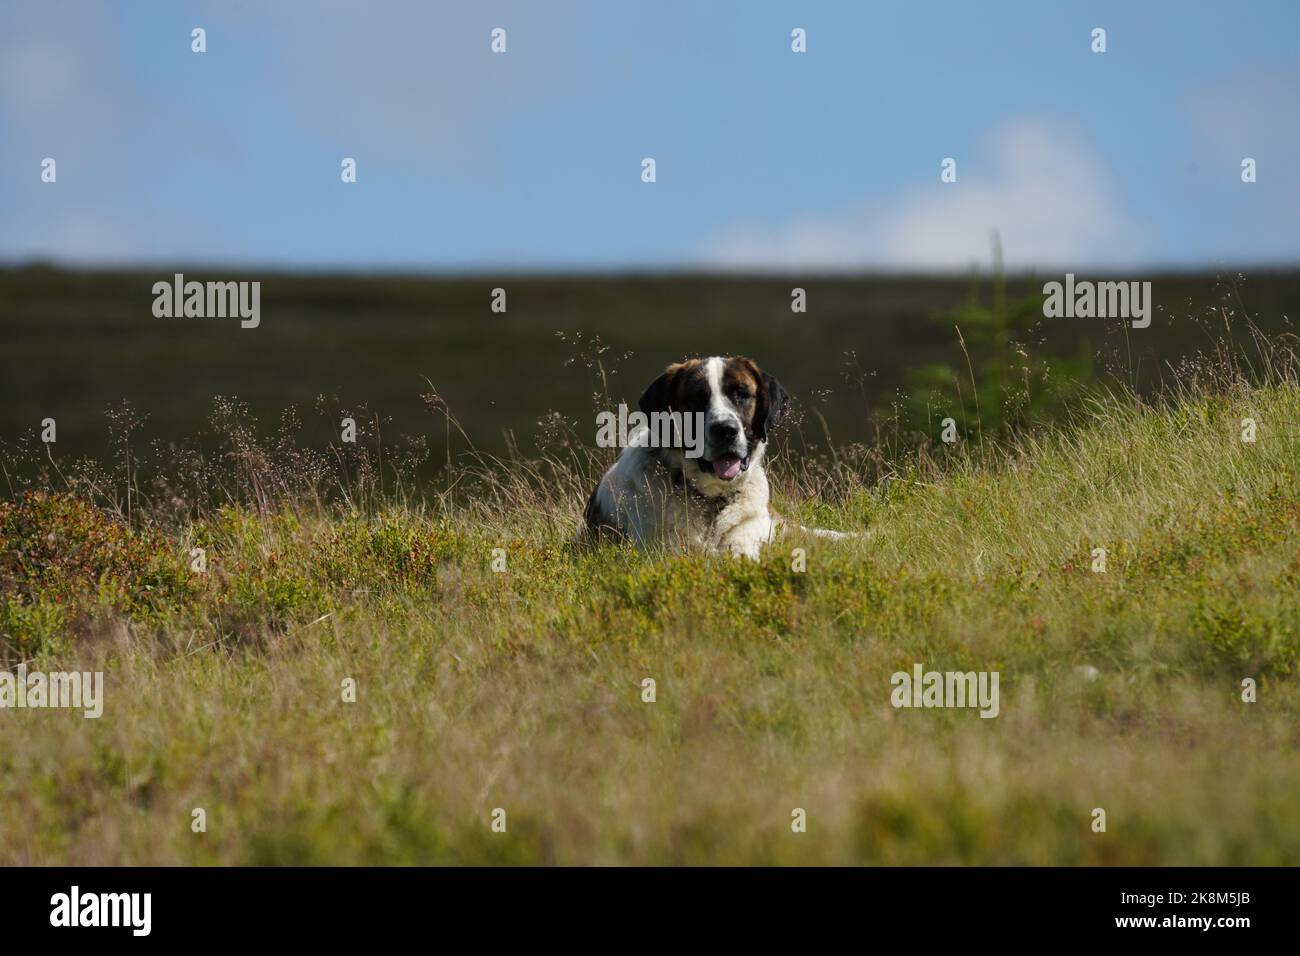 A closeup shot of a Rafeiro do Alentejo dog sitting on a grass field on a sunny day Stock Photo